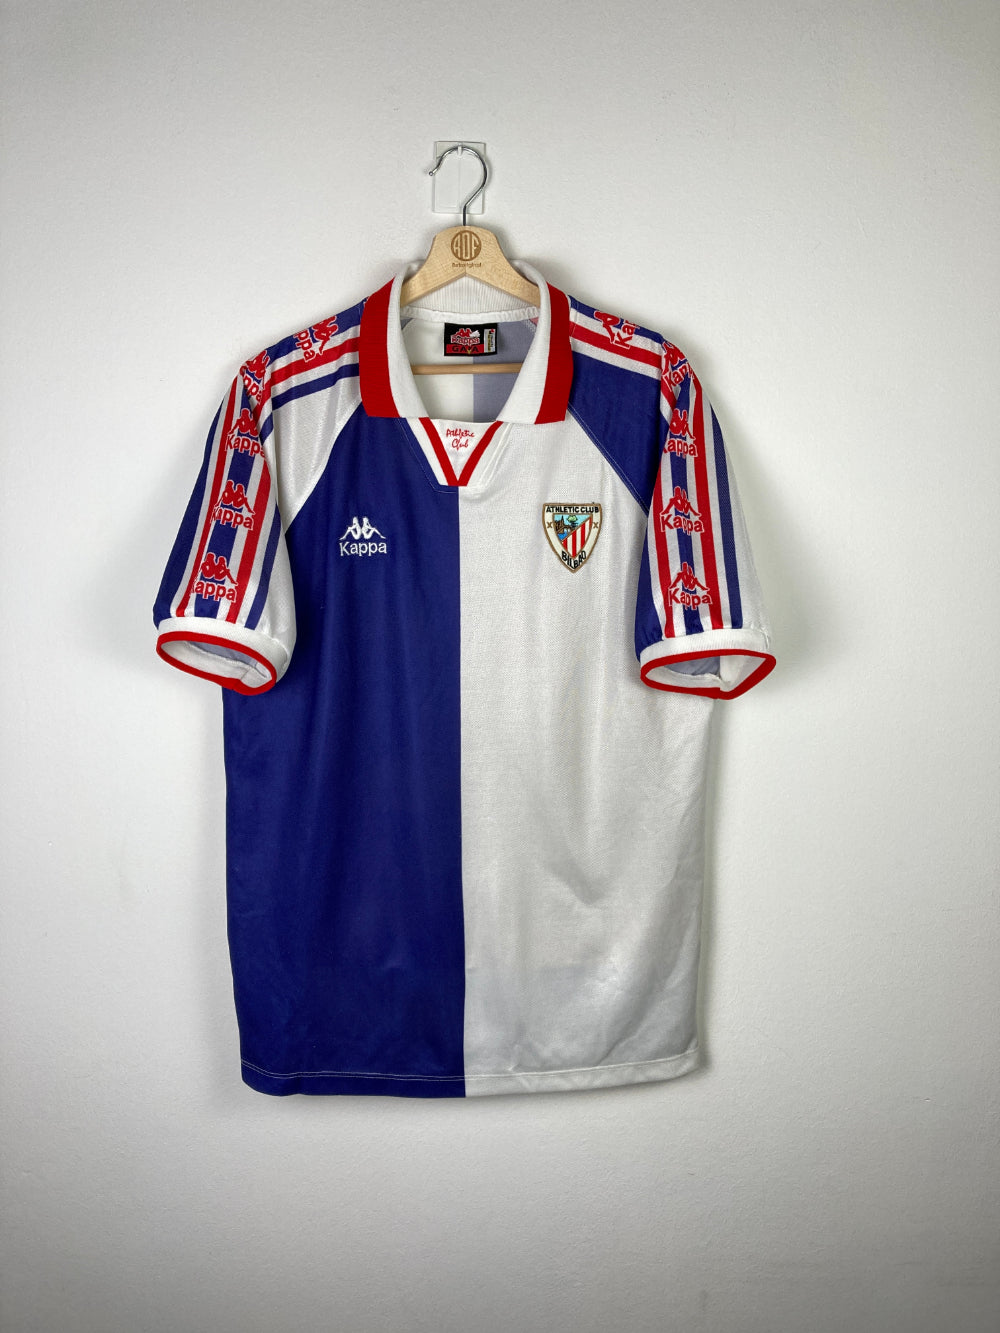 
                  
                    Original Athletic Bilbao Away Jersey 1997-1998  - L
                  
                